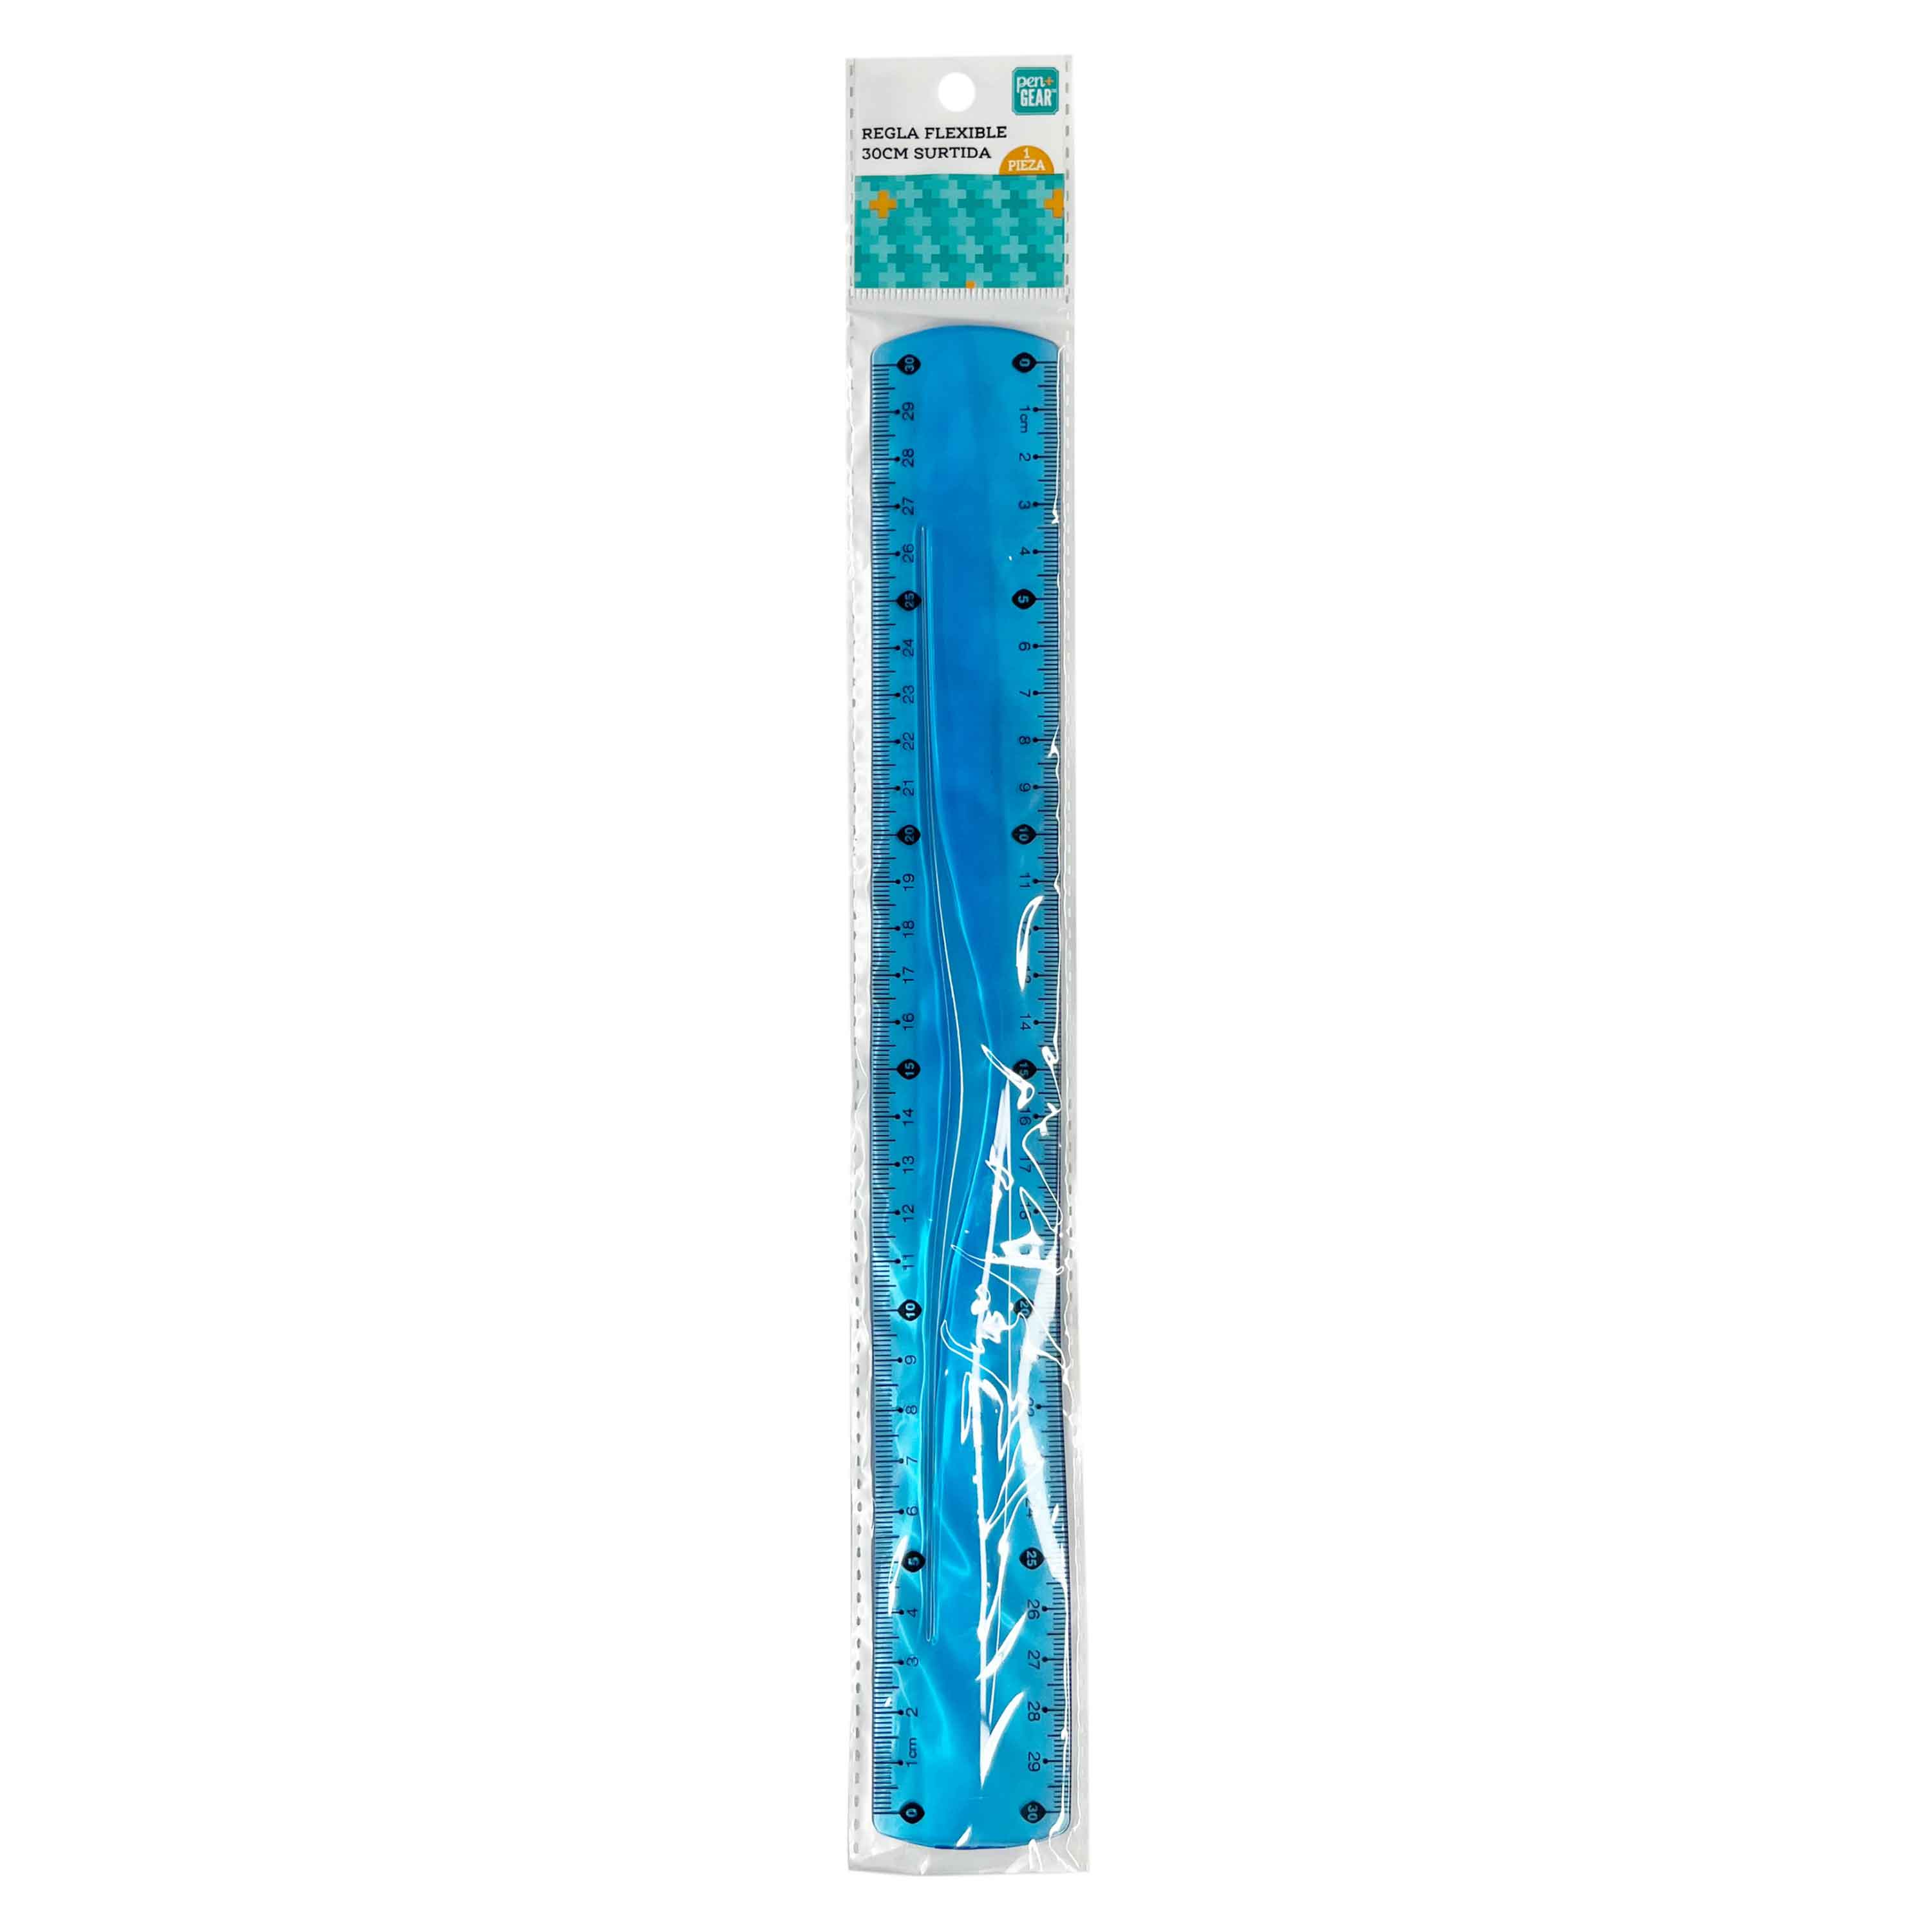 Regla plastica Linea Azul 15cm REF: 0639 – Fargoriente – Distribuciones